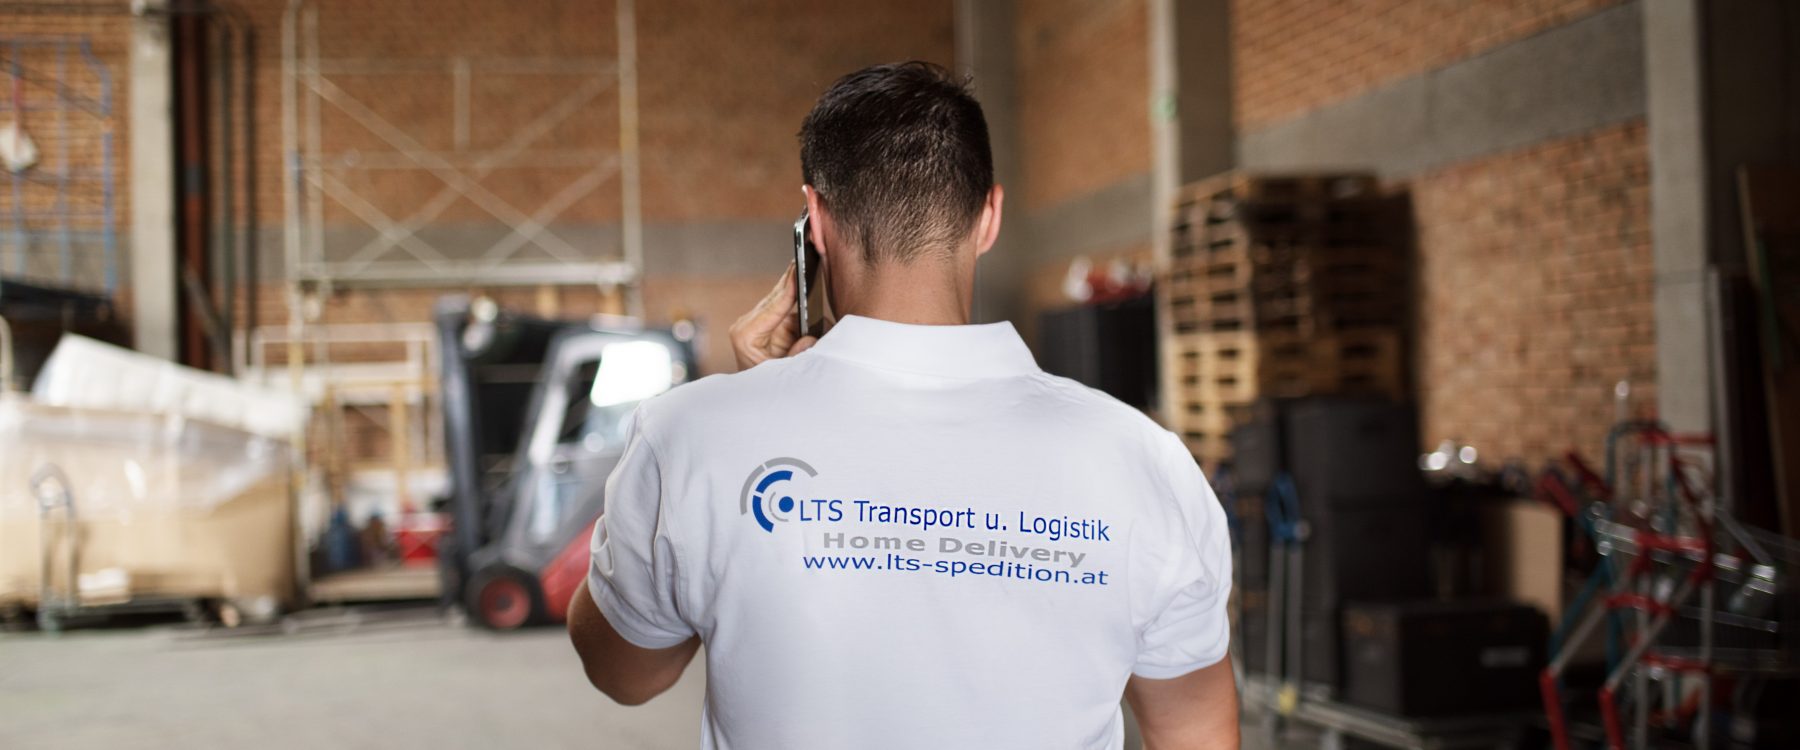 LTS Transport und Logistik